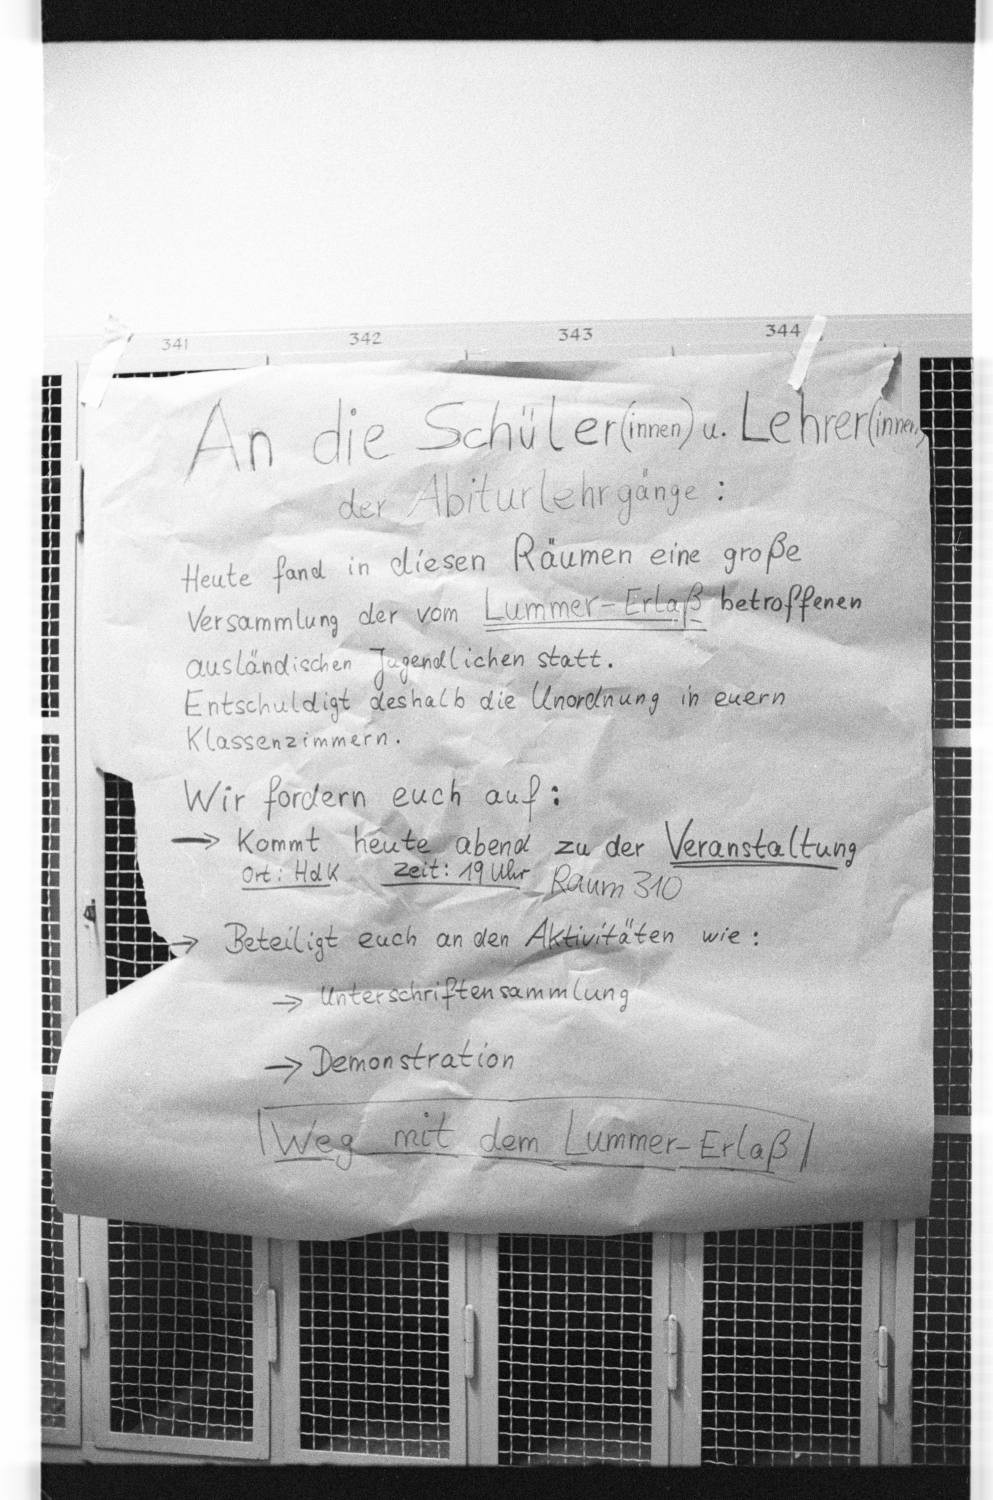 Kleinbildnegative: „Weg mit dem Lummer-Erlaß“, Schöneberger Schule, 1981 (Museen Tempelhof-Schöneberg/Jürgen Henschel RR-F)